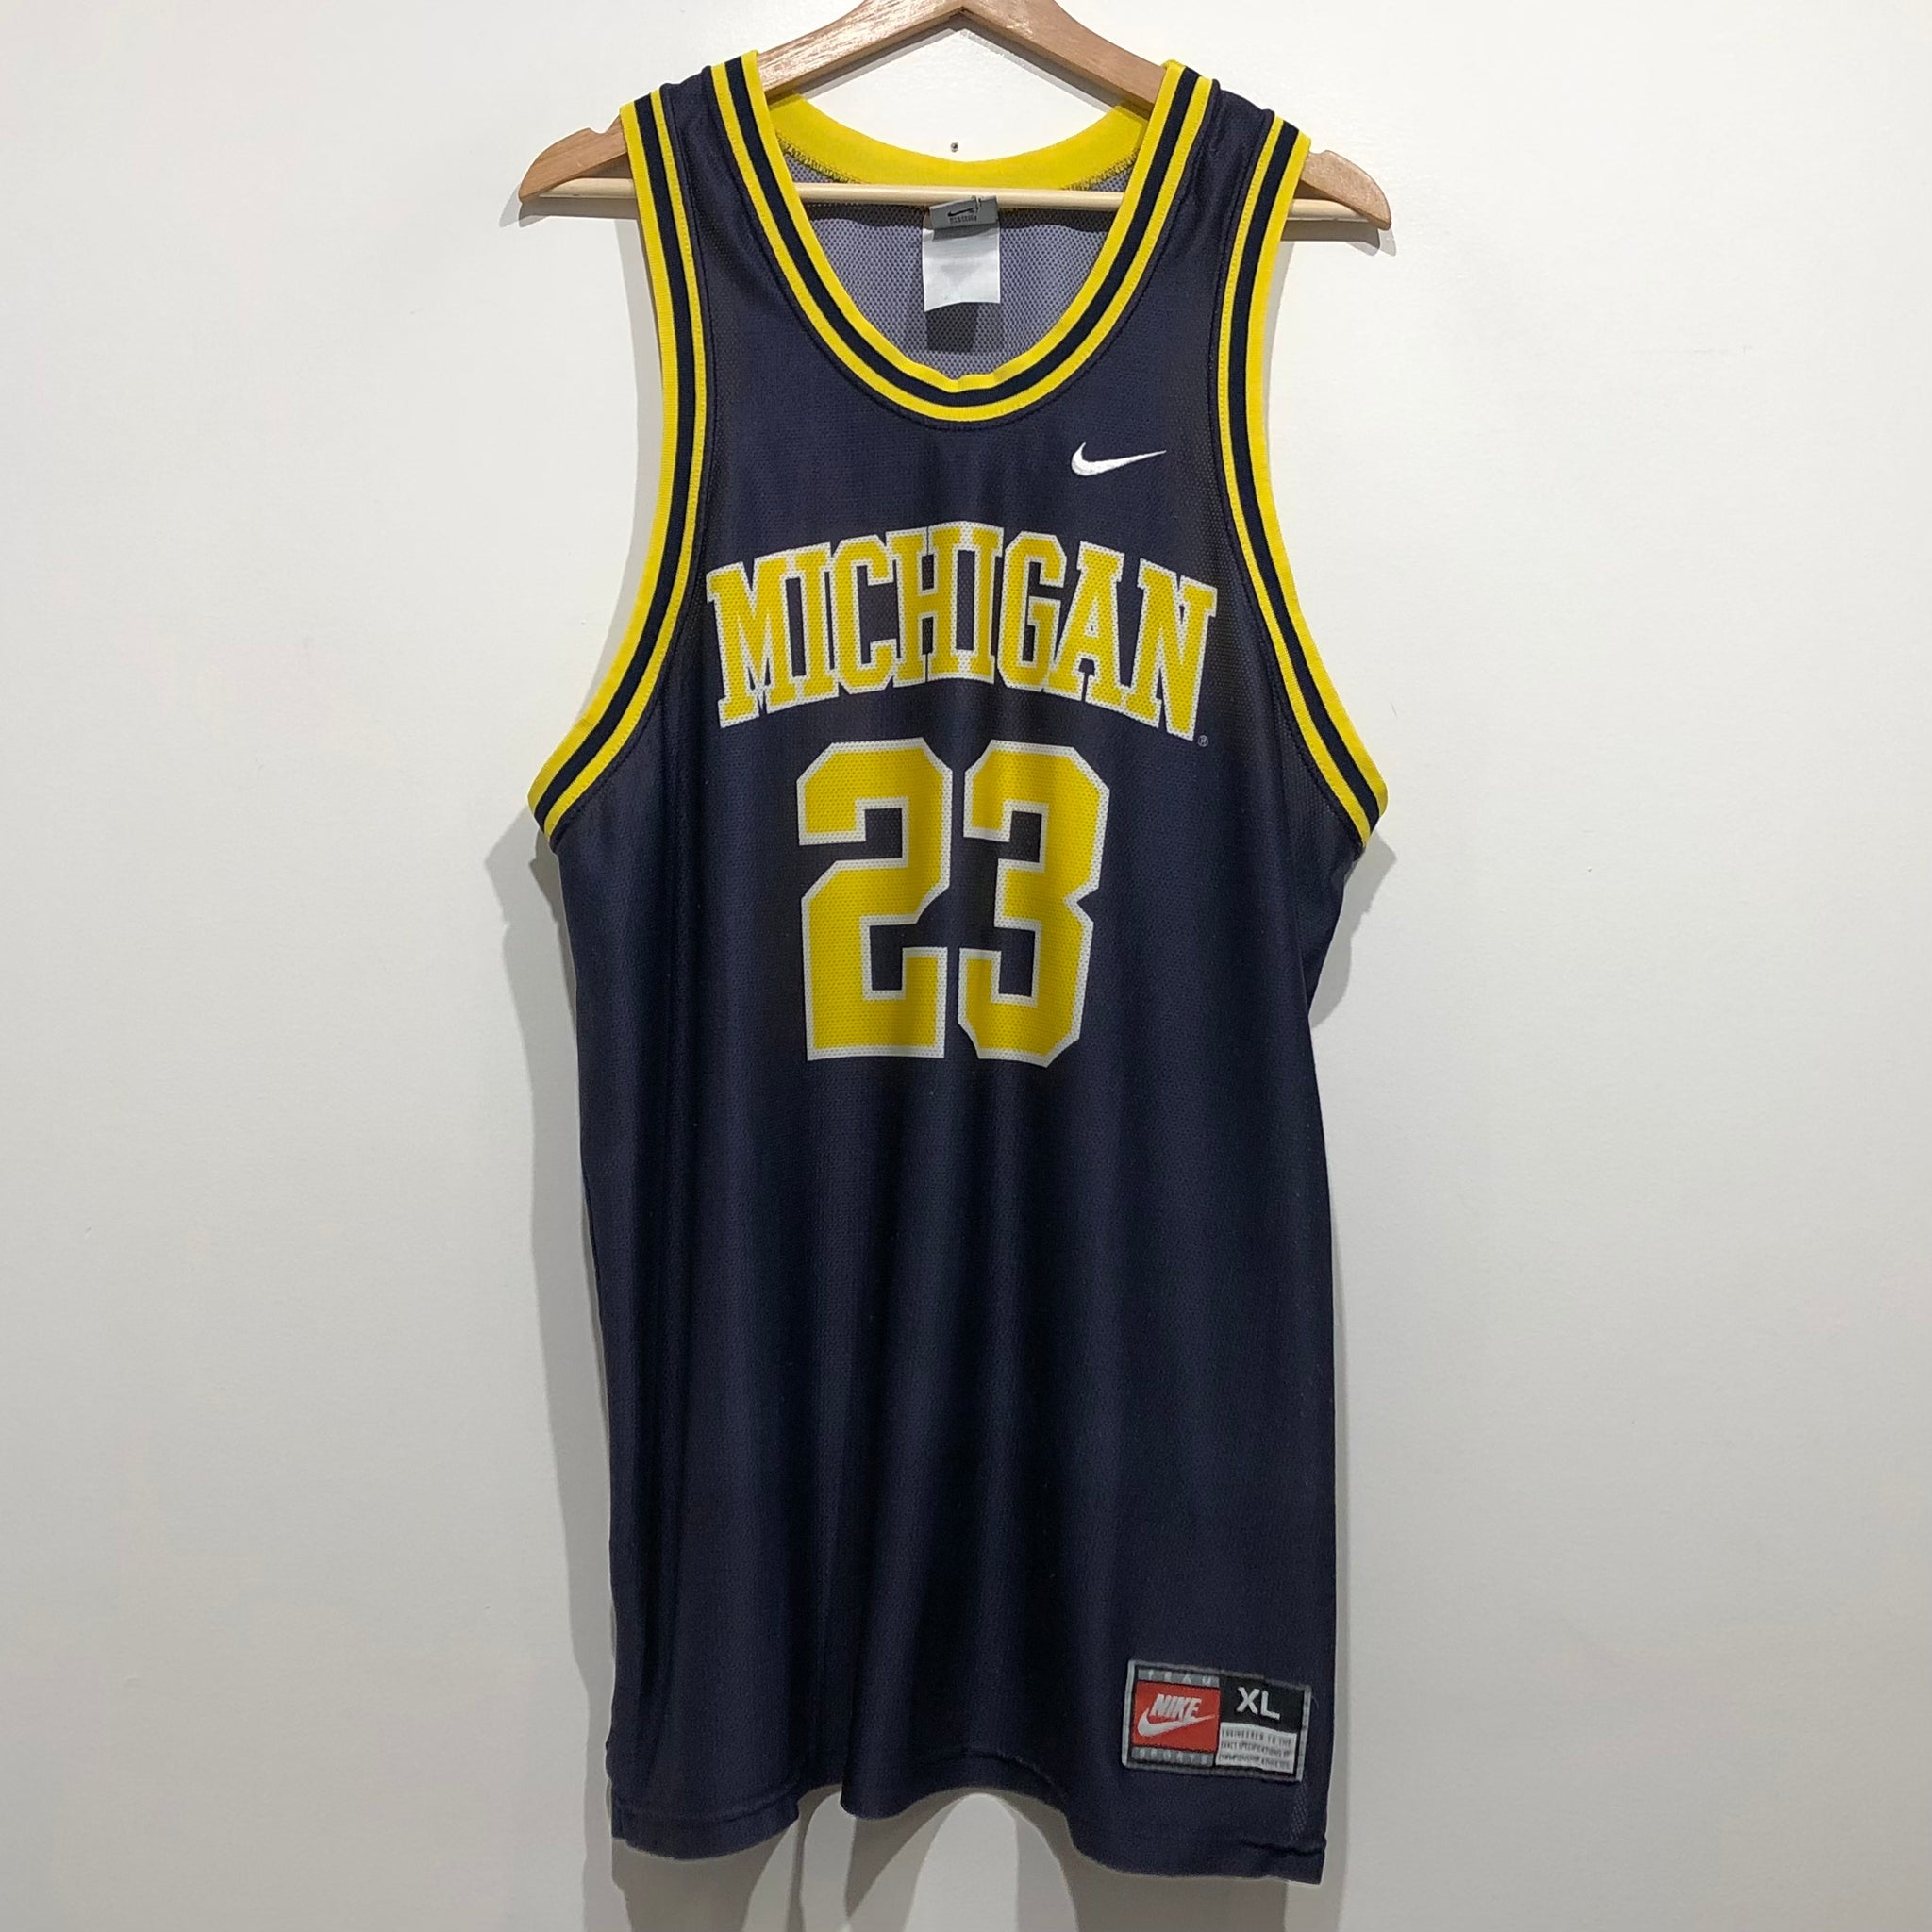 Vintage Michigan Wolverines Basketball Jersey XL